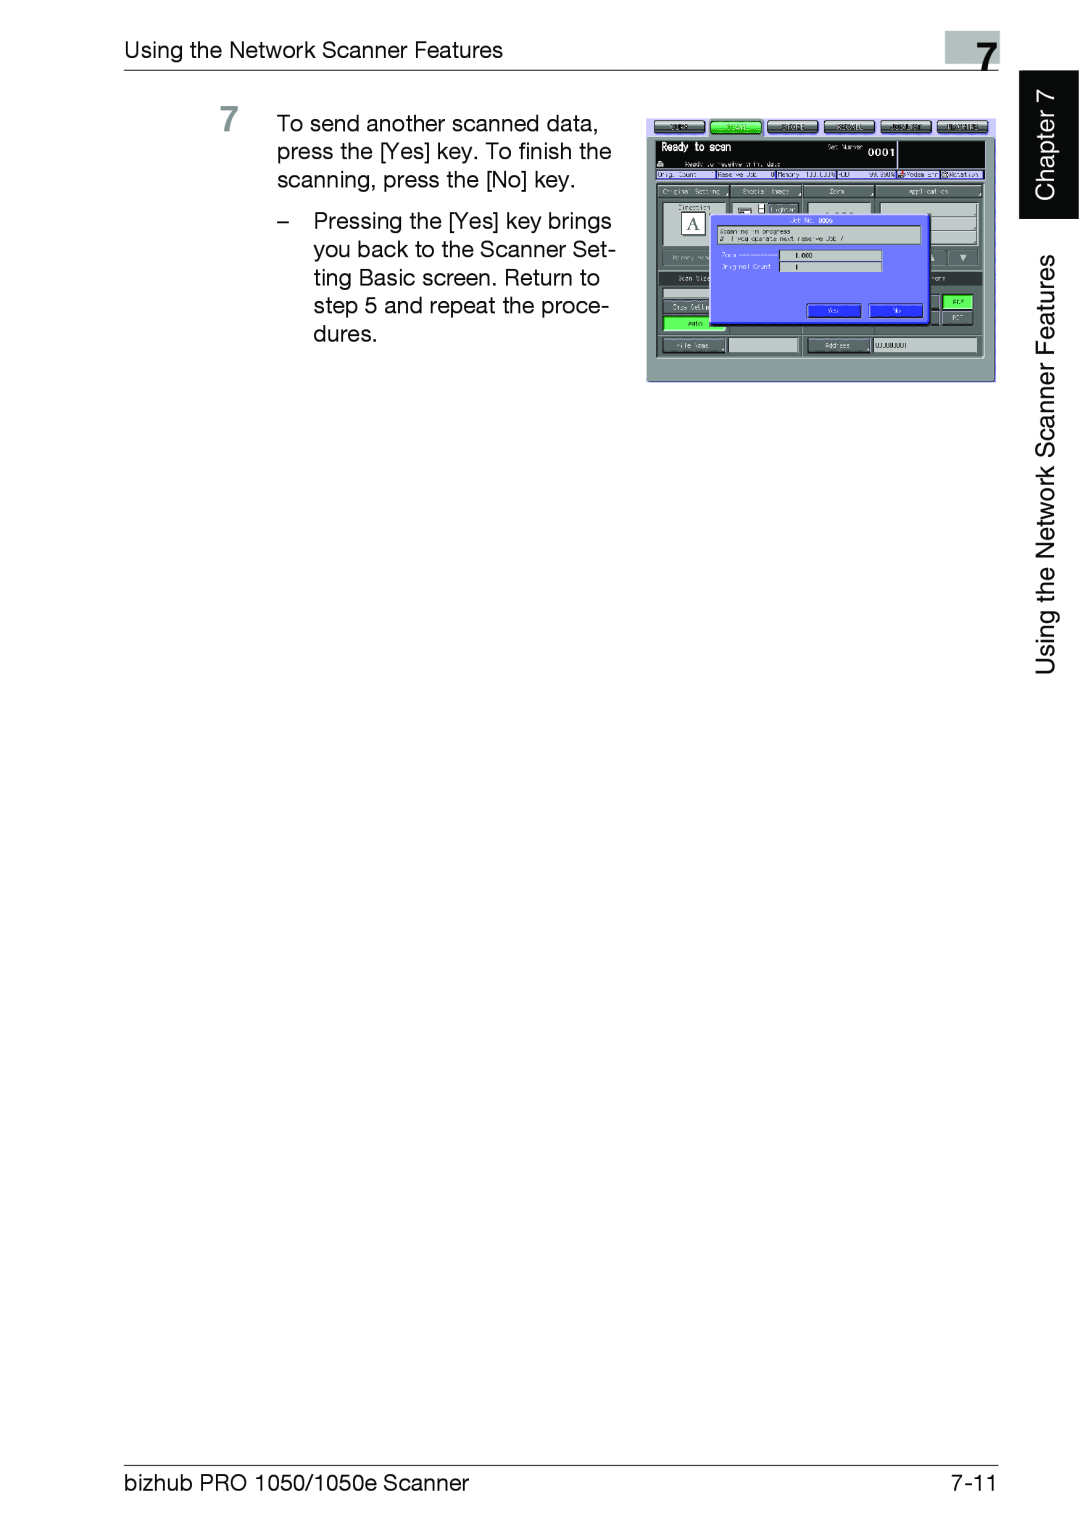 Konica Minolta 1050E appendix Chapter, Using the Network Scanner Features, bizhub PRO 1050/1050e Scanner, 7-11 